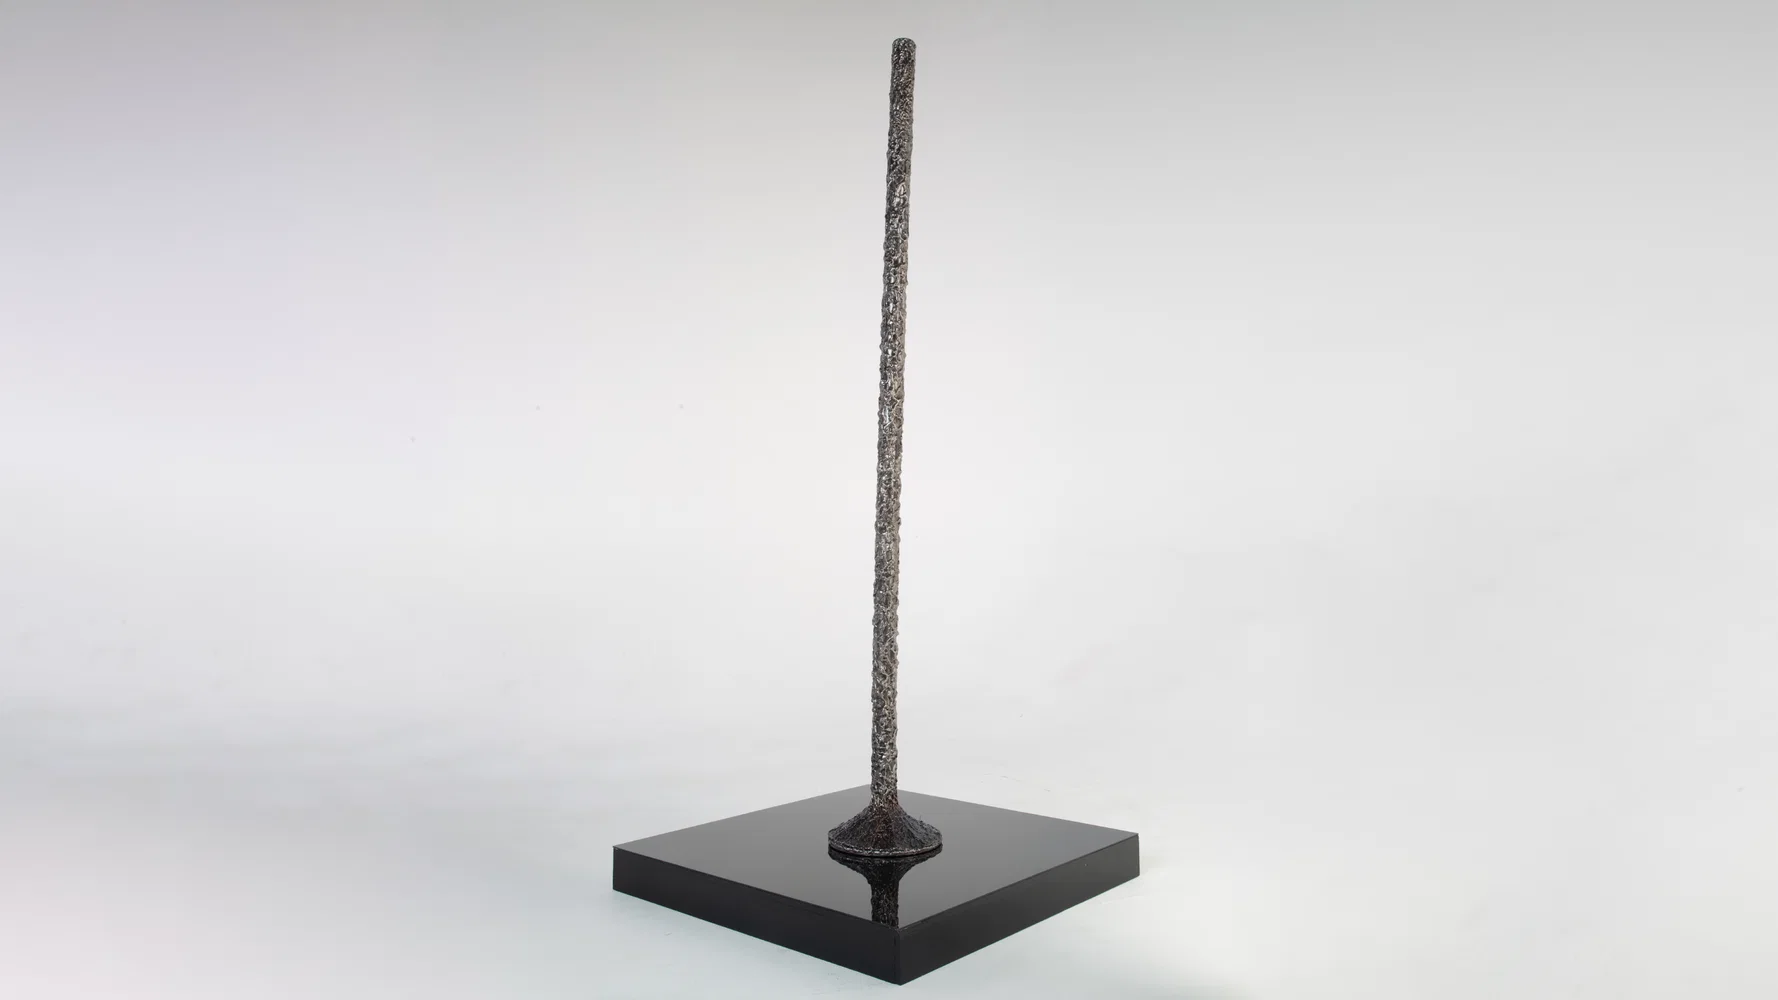 moq - reimagining tree (metal sculpture)